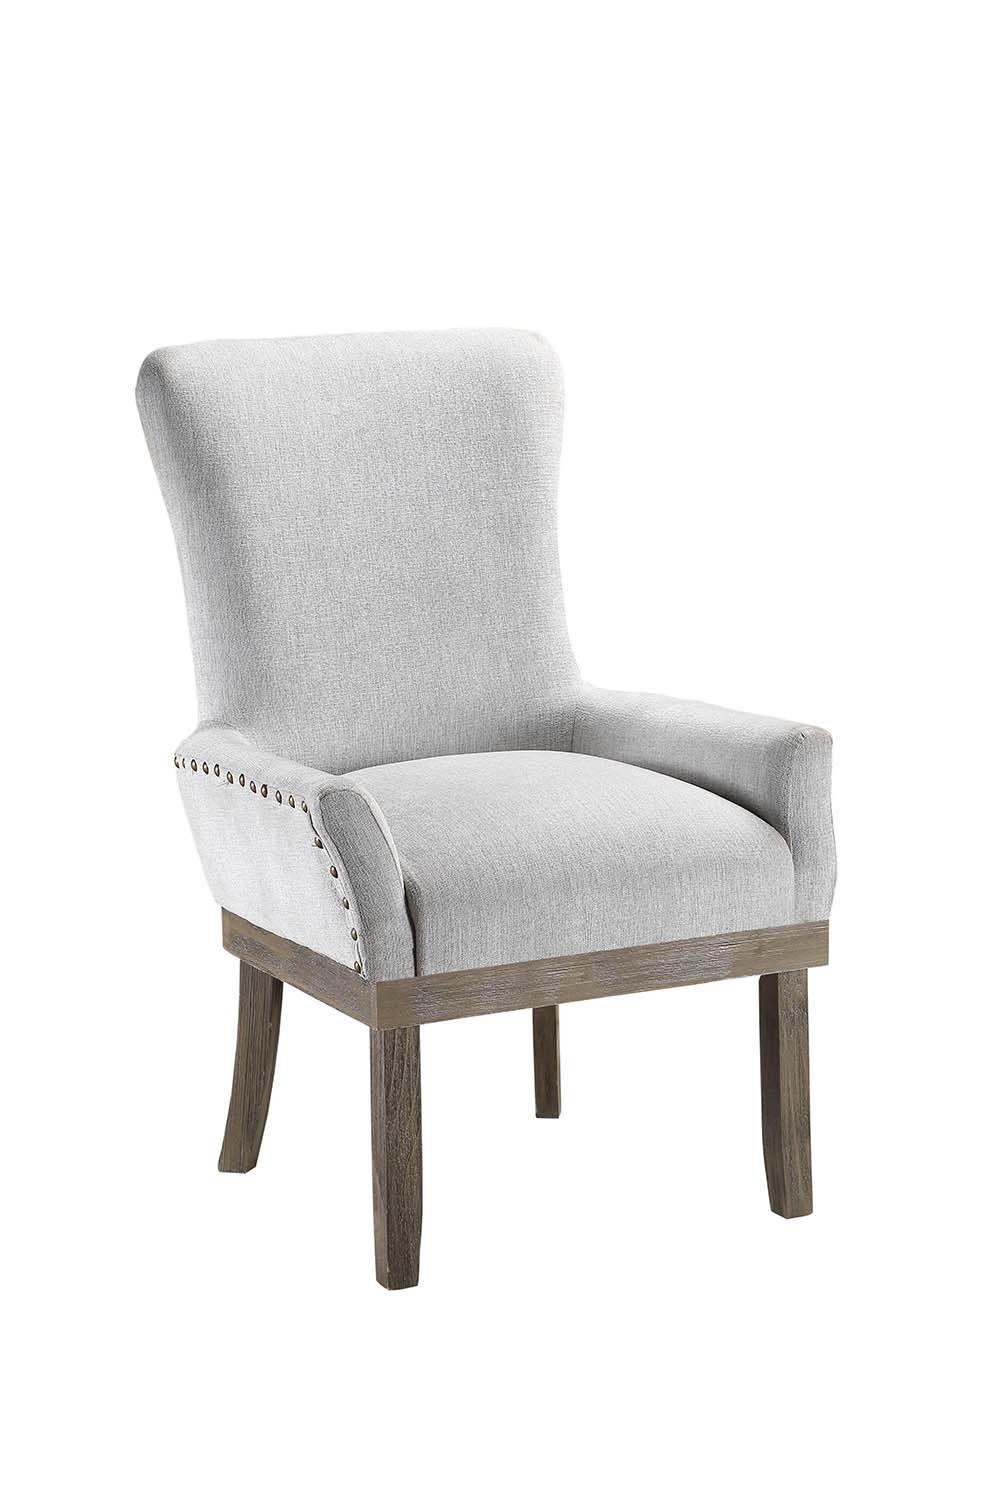 Traditional, Rustic Arm Chair Set Landon DN00952-2pcs in Gray Linen